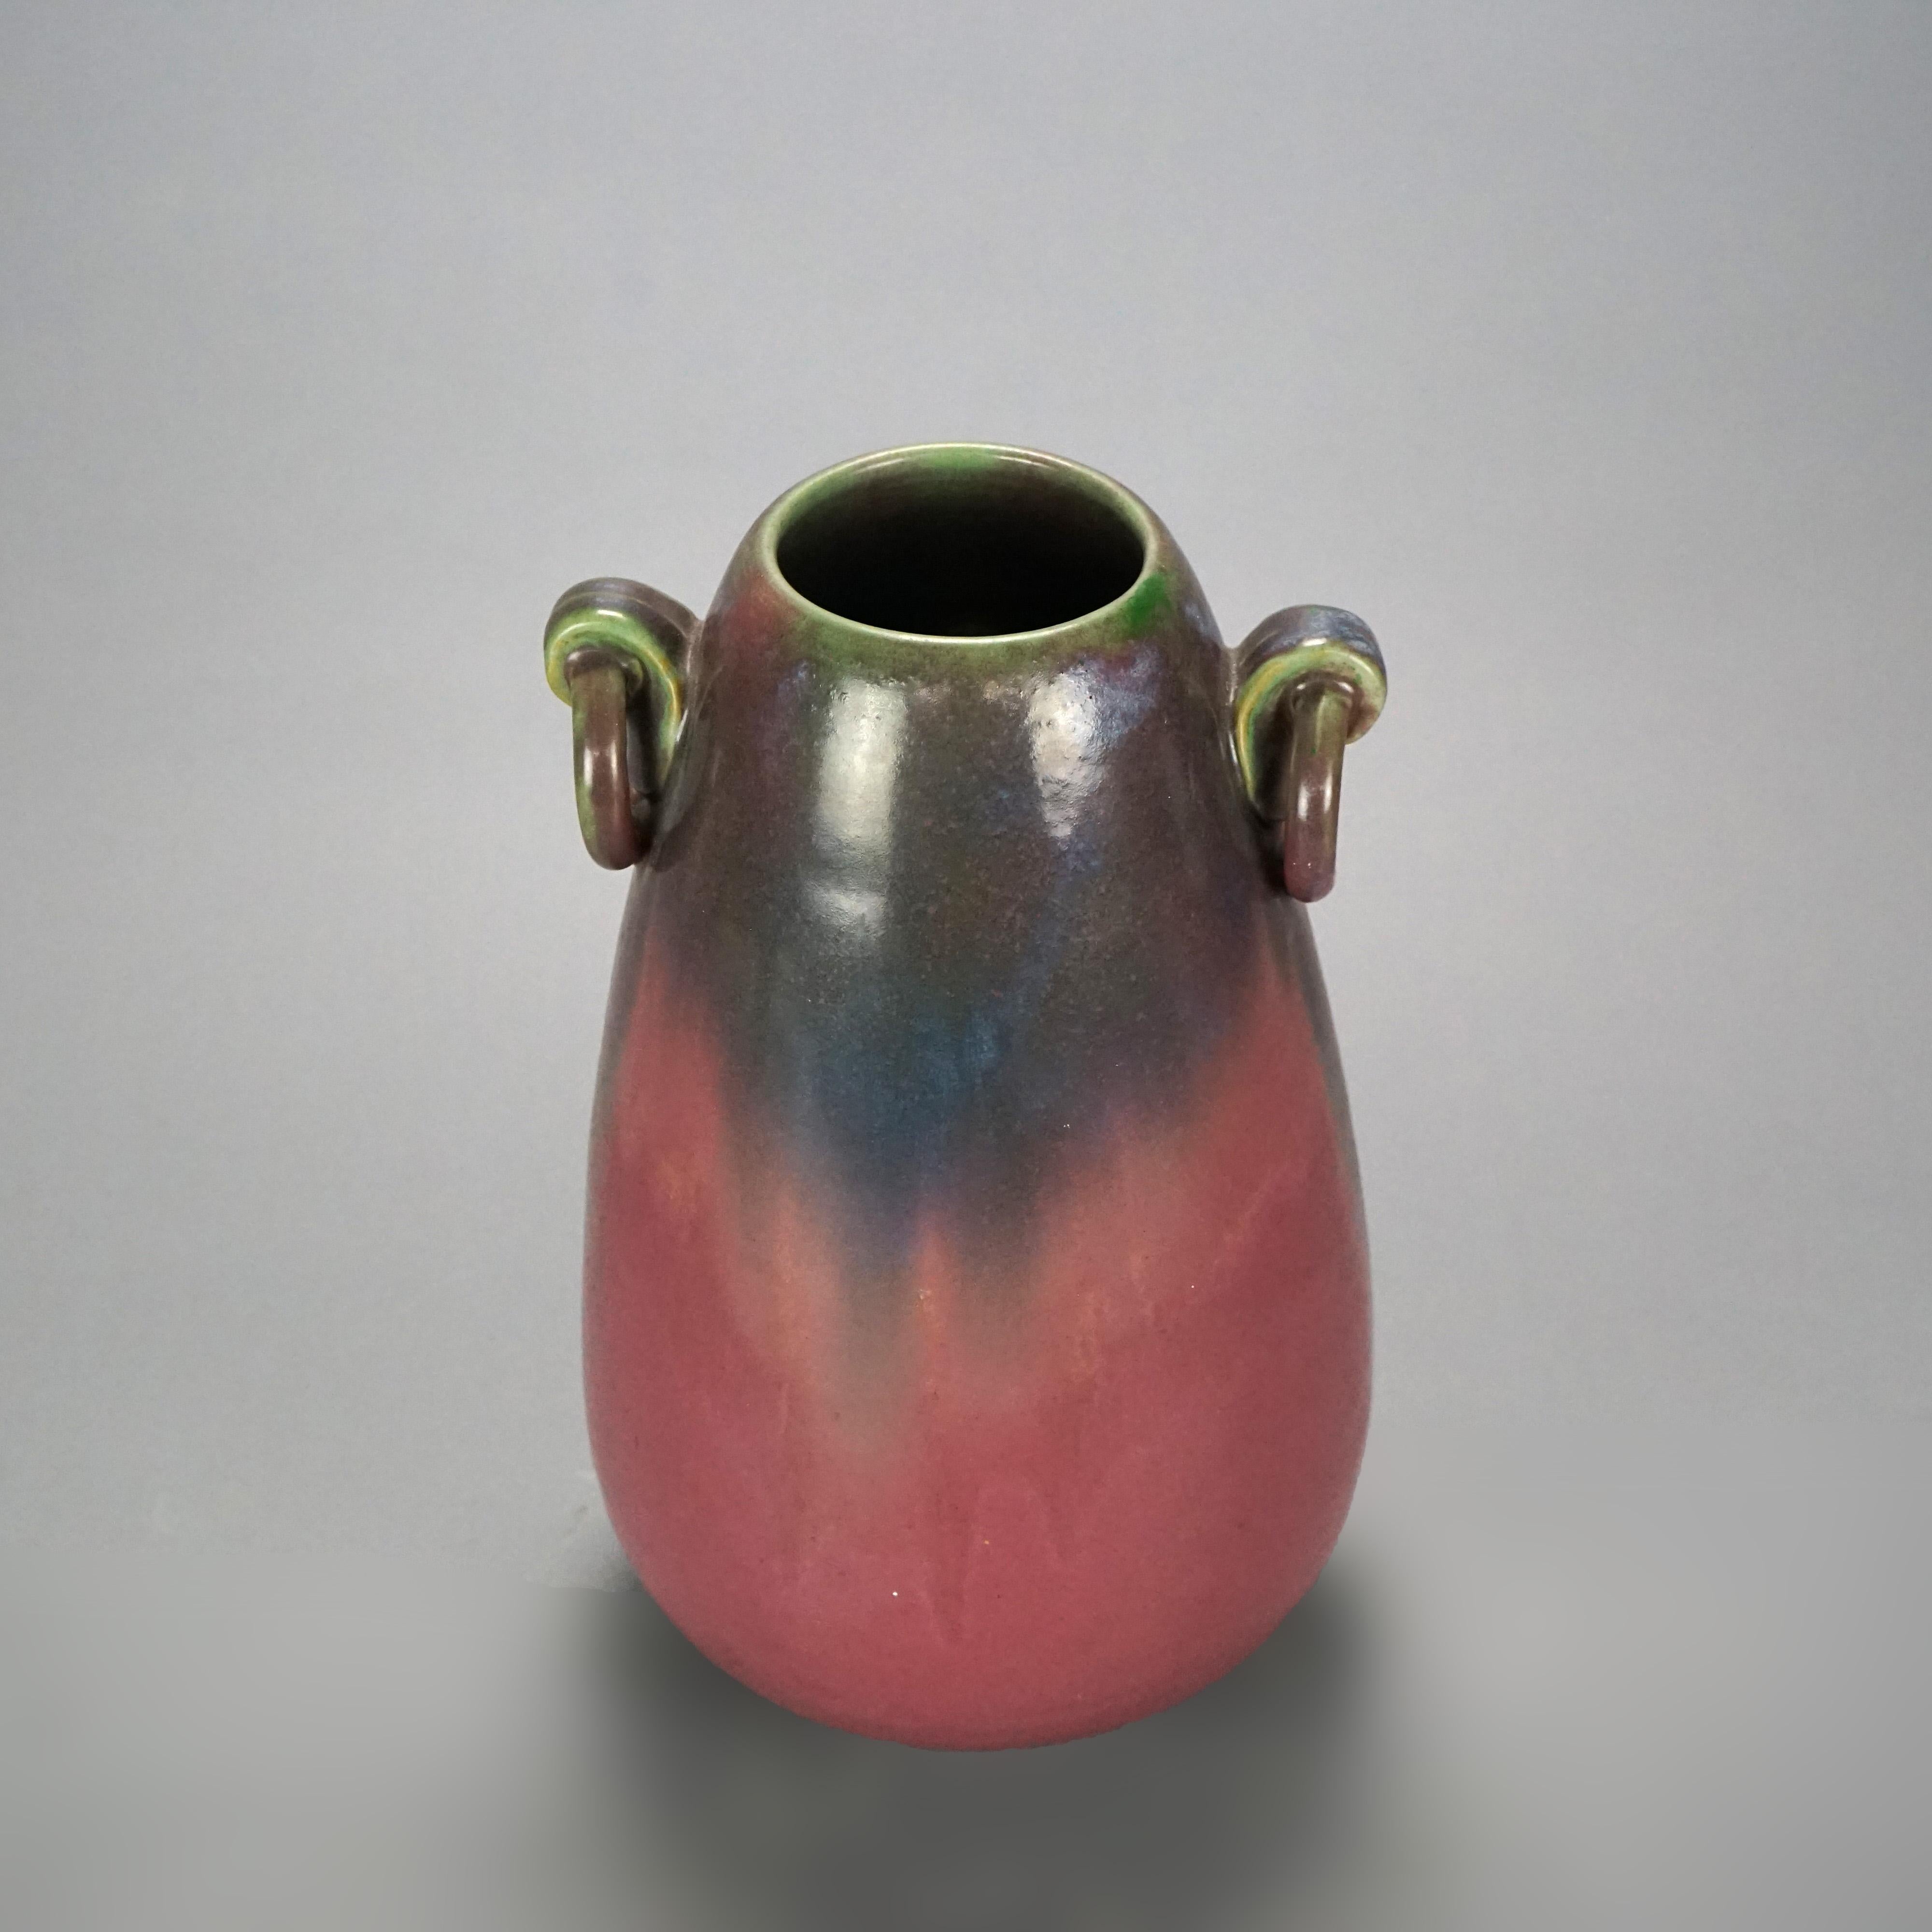 American Antique Arts & Crafts Fulper Art Pottery Vase with Ring Handles Circa 1920